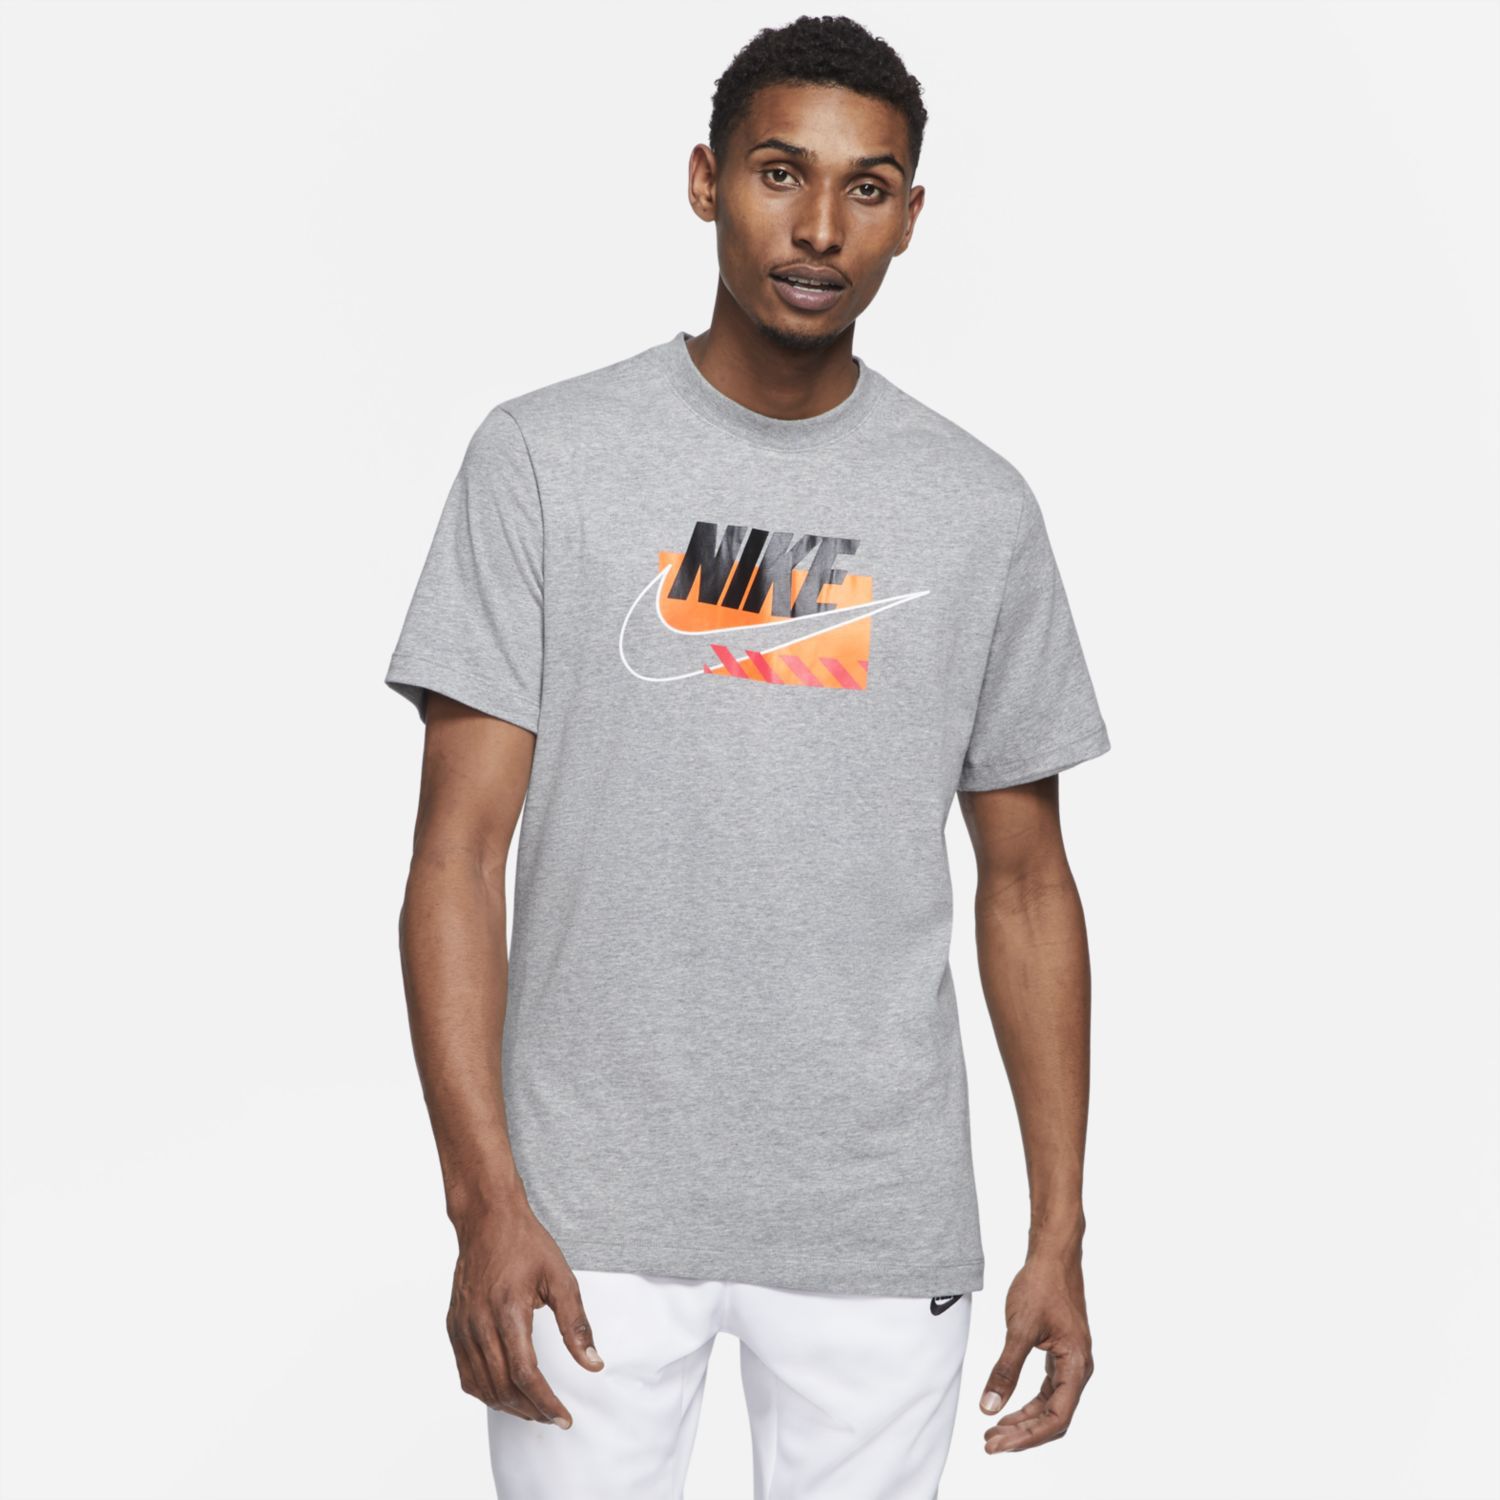 gray and orange nike shirt